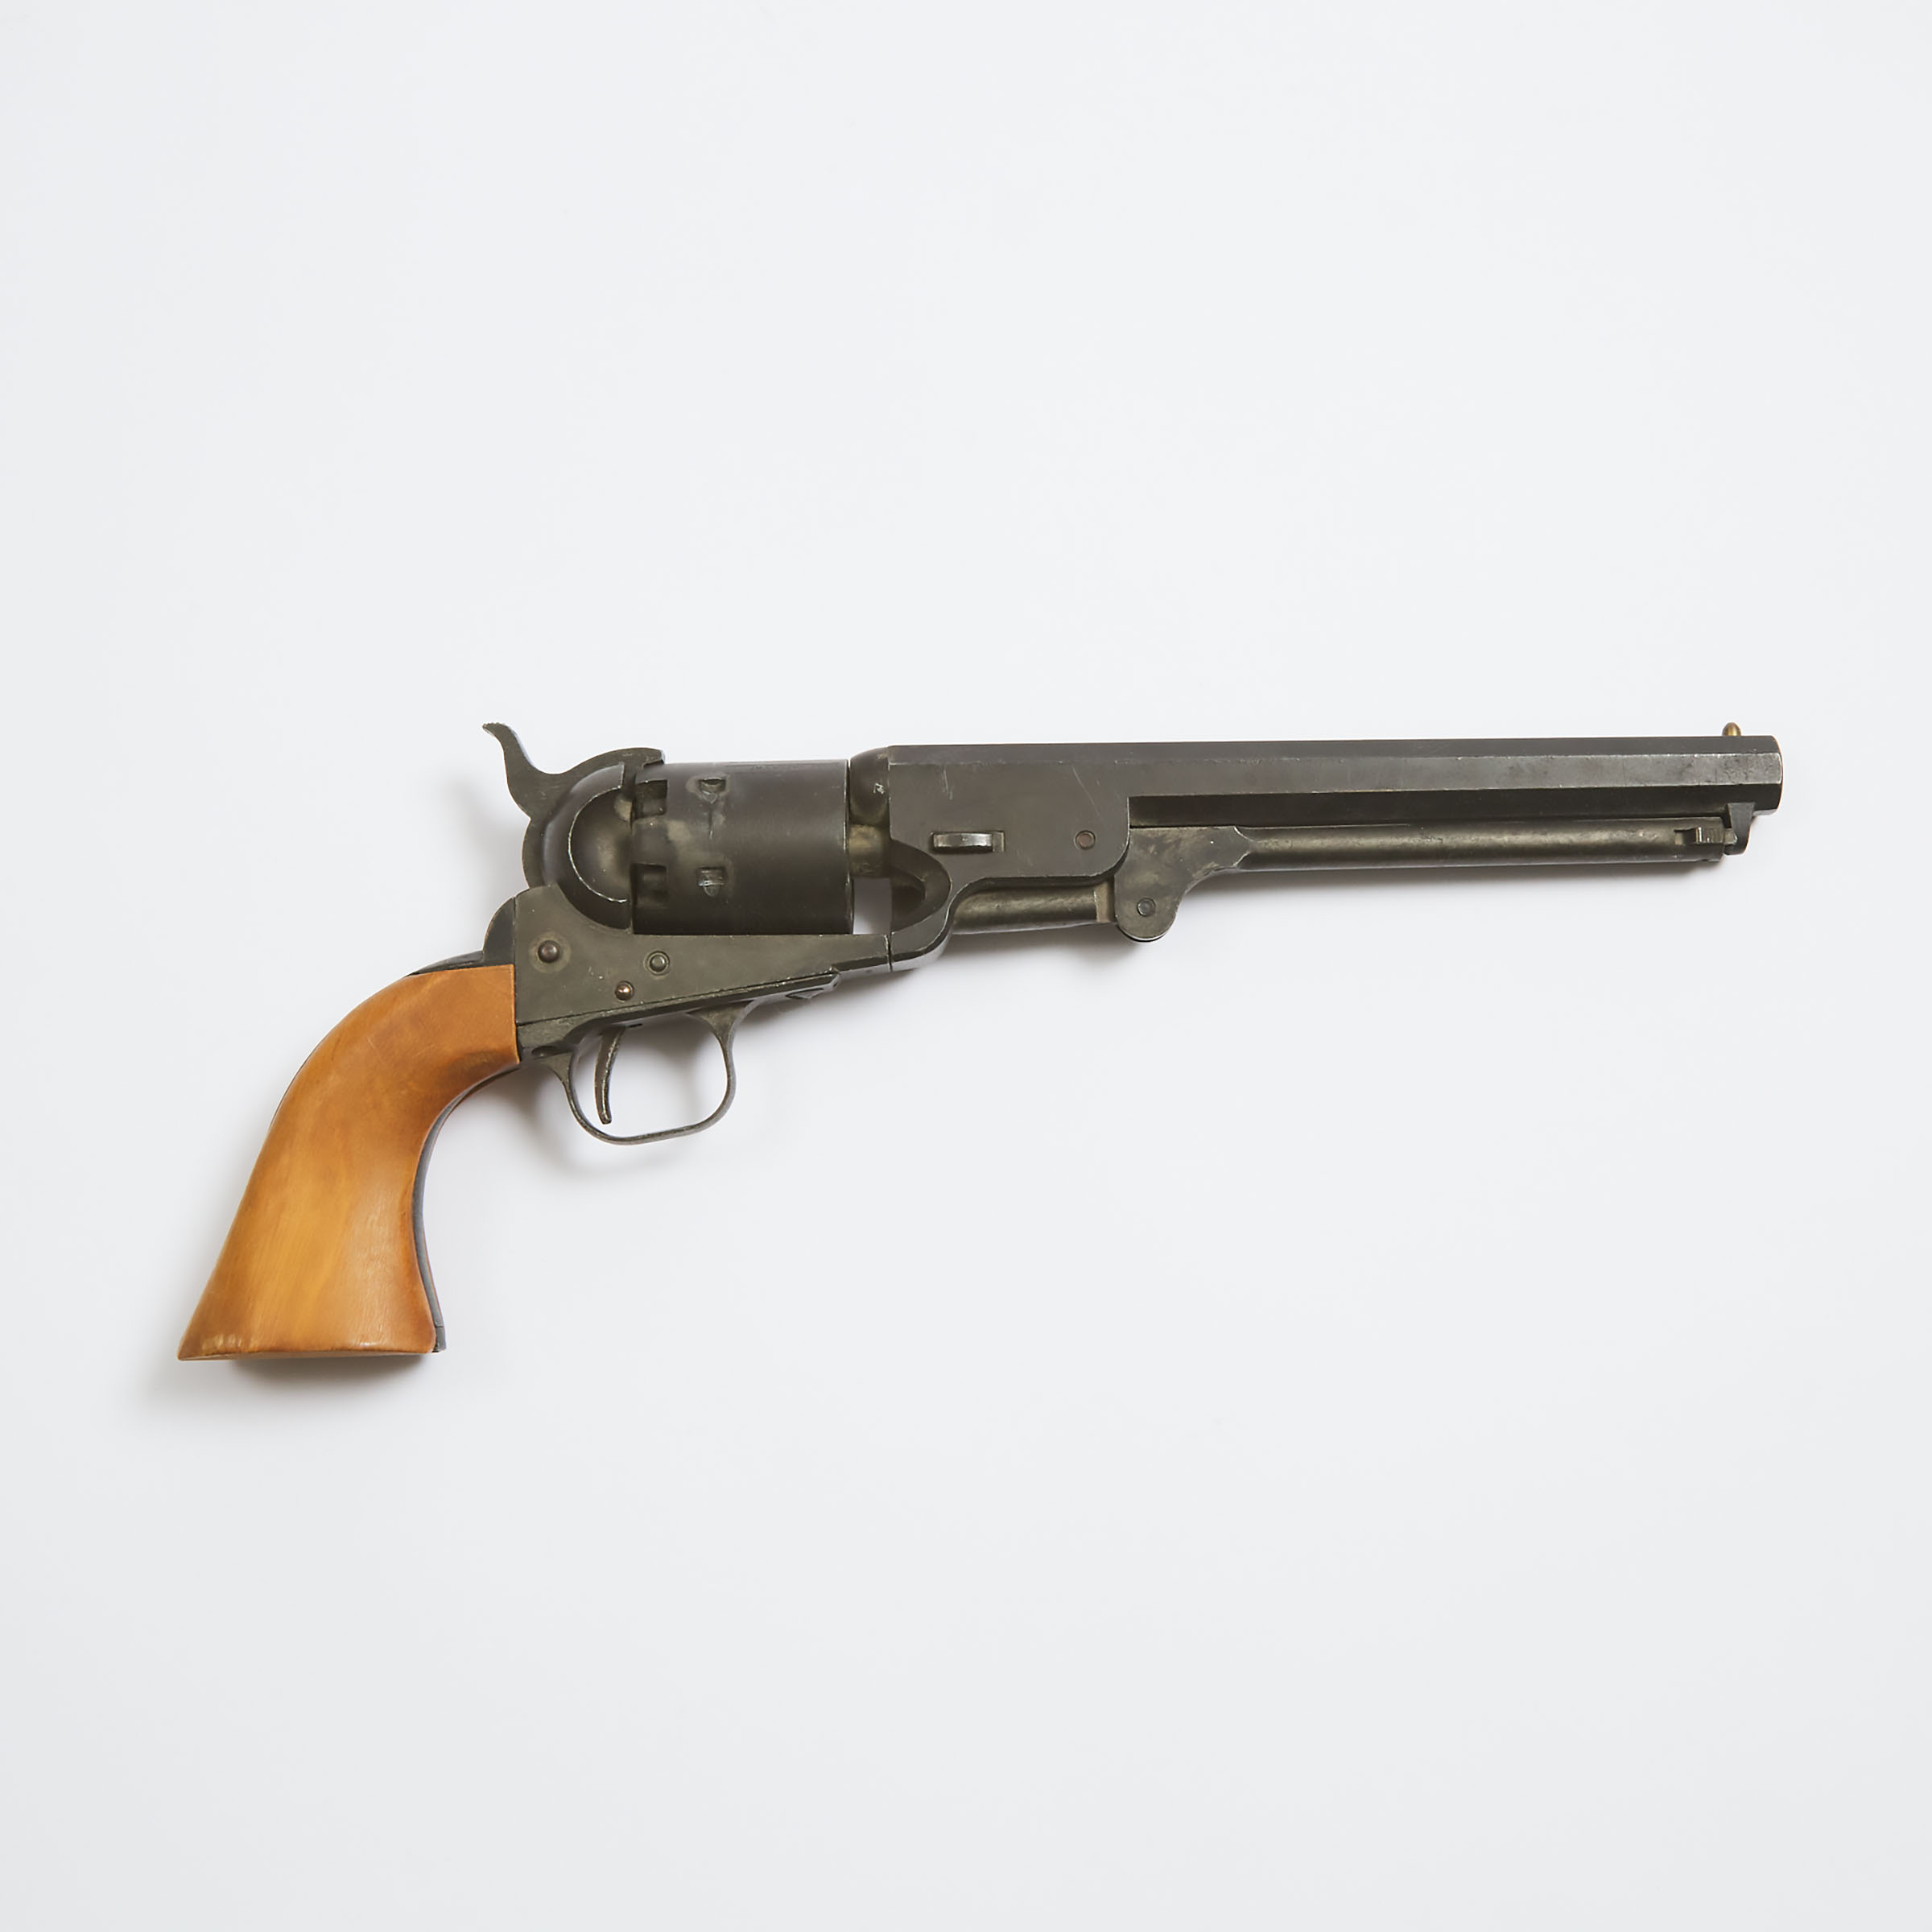 Japanese Replica Cap Gun Modelled as a Colt 1851 Navy Revolver, mid 20th century